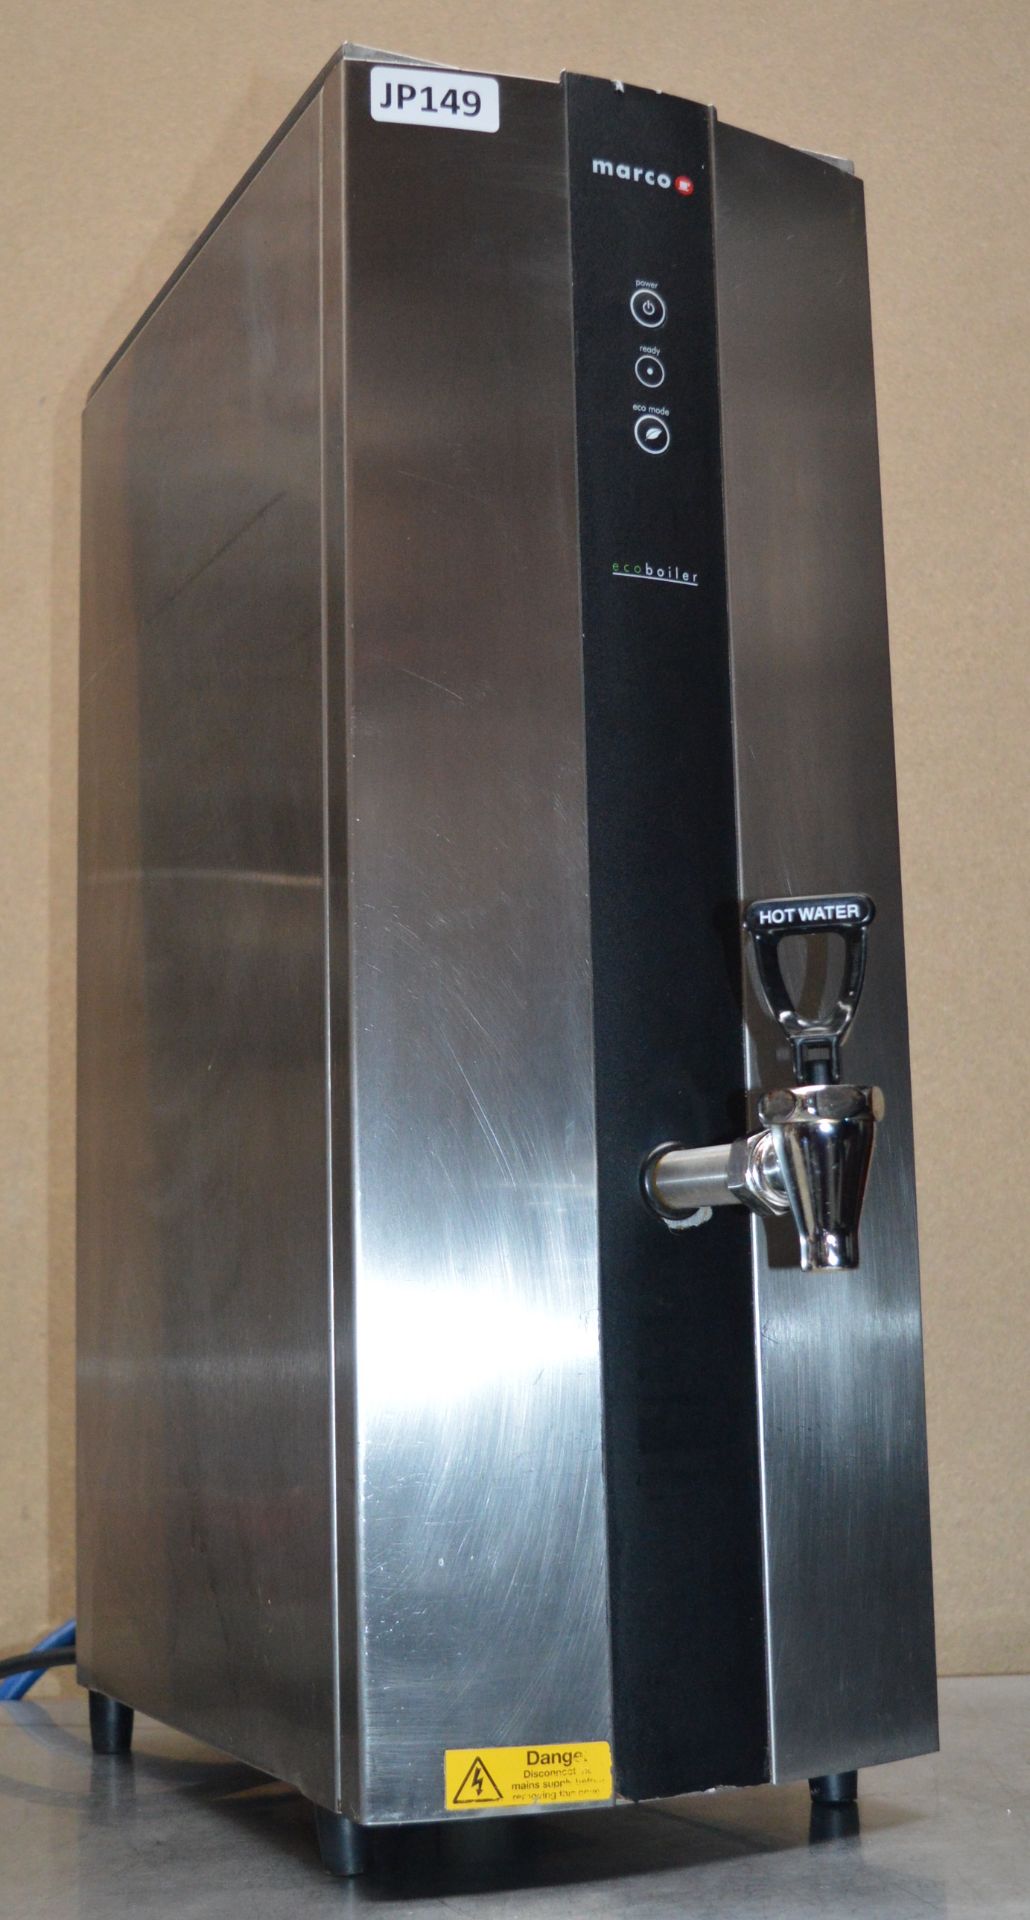 1 x Marco EcoBoiler T20 Counter Top Hot Water Dispenser - 2.8kW 20 Litre Capacity - CL232 -